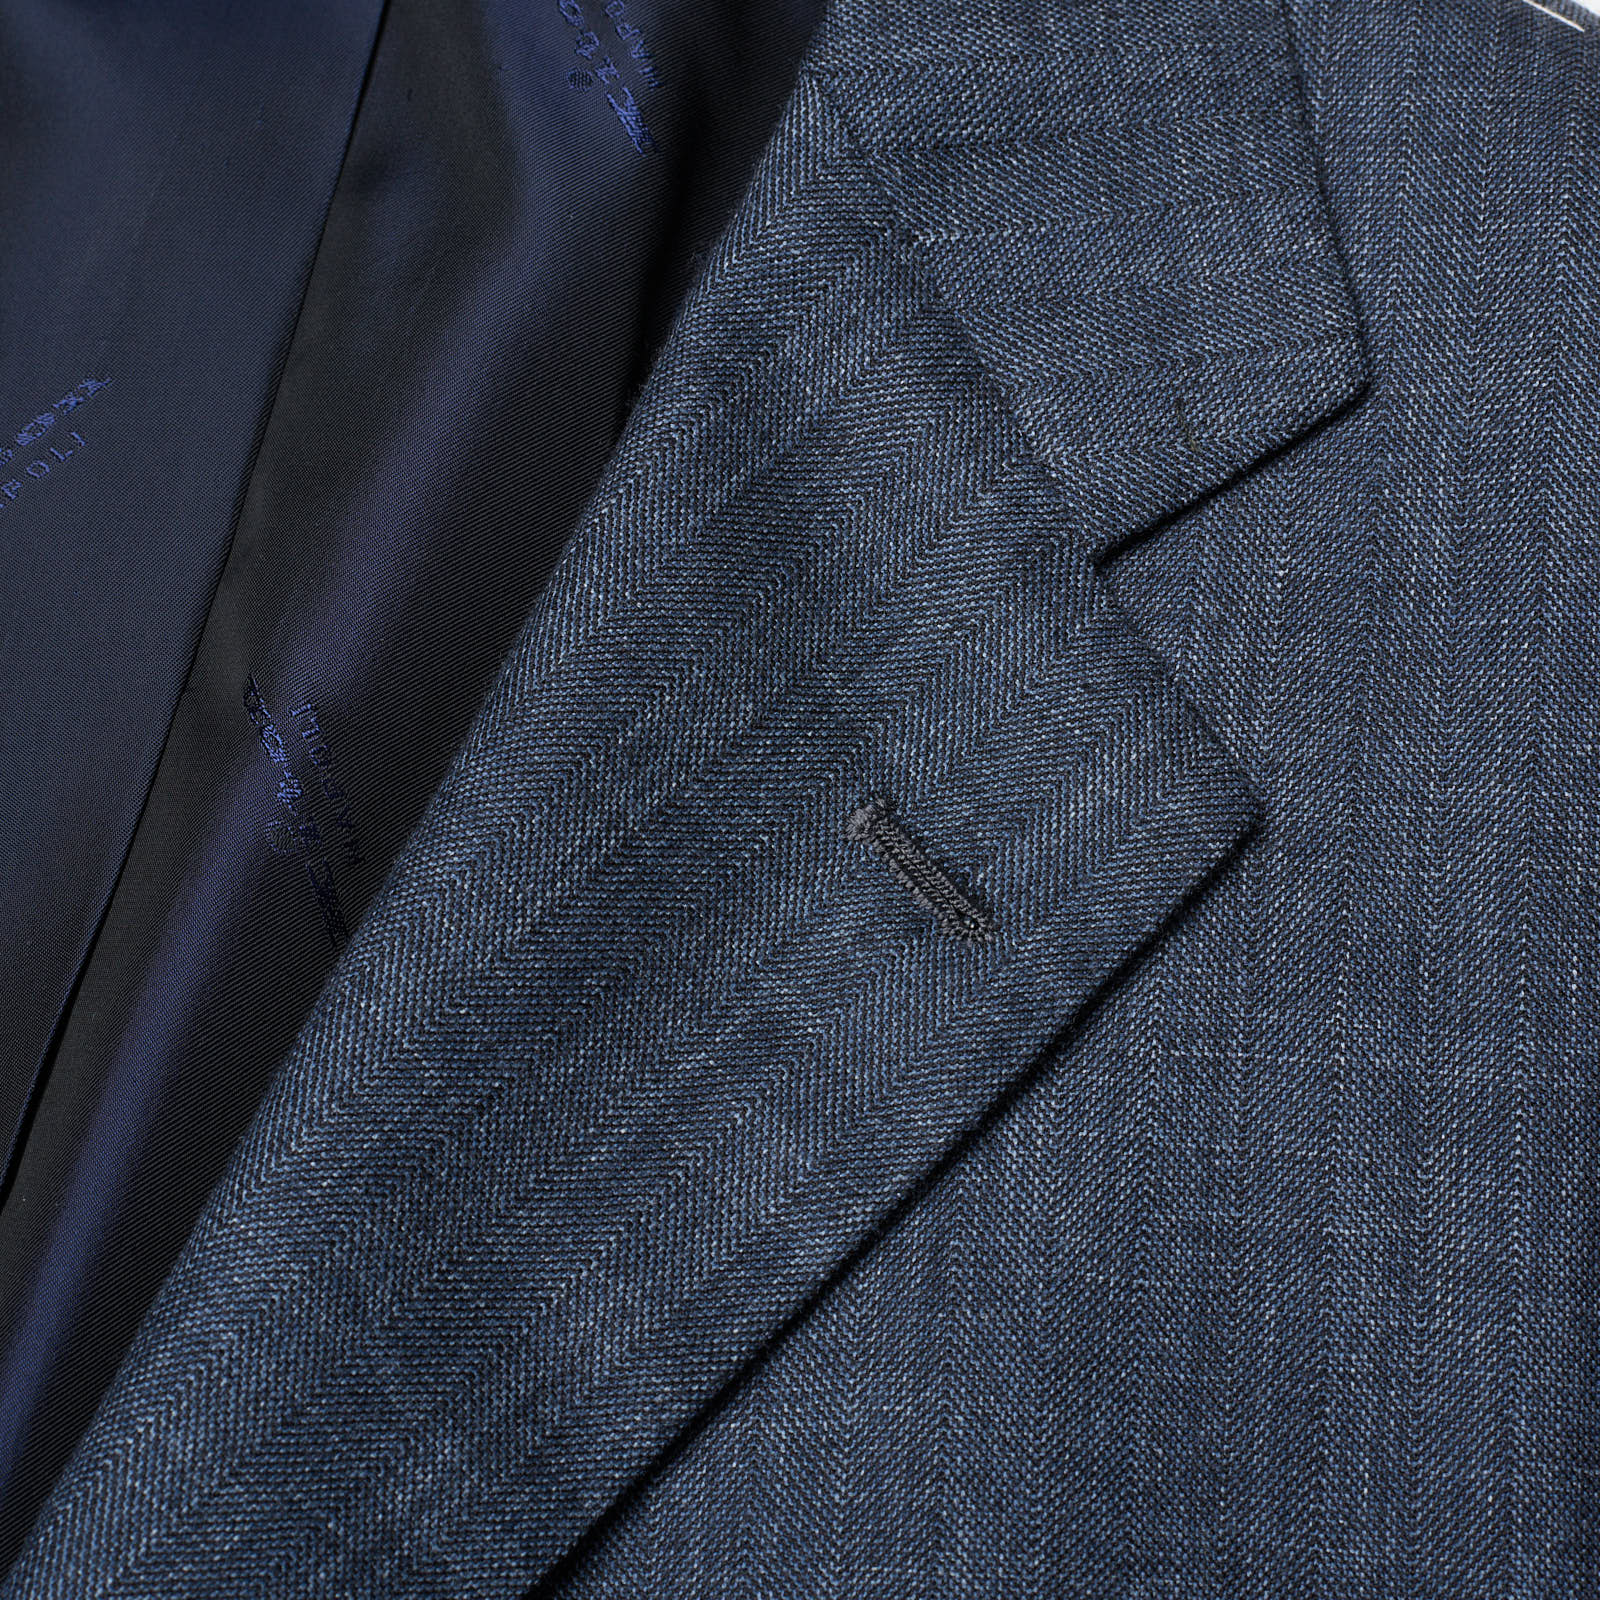 KITON Napoli Handmade Blue Herringbone Wool-Cashmere Suit EU 52 NEW US 42